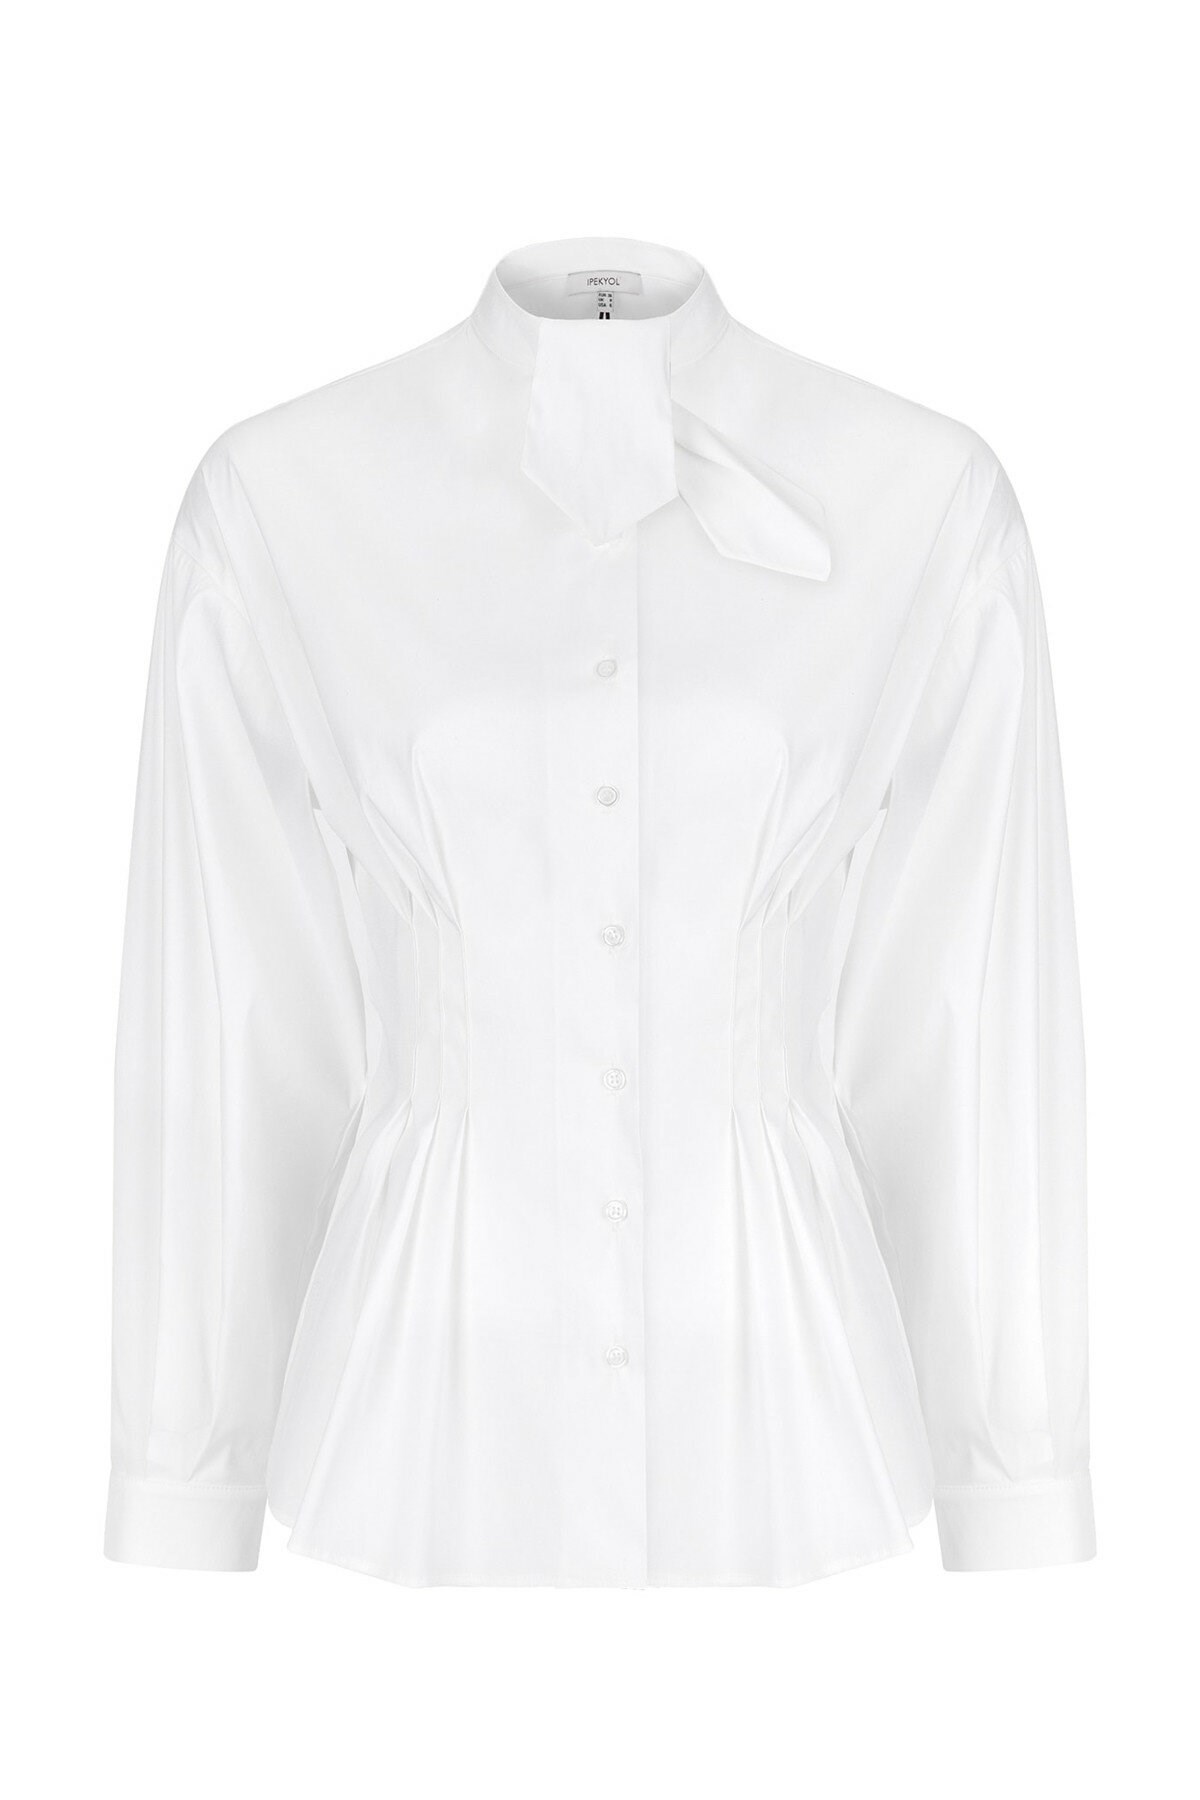 İPEKYOL Fular Yaka Beyaz Bluz